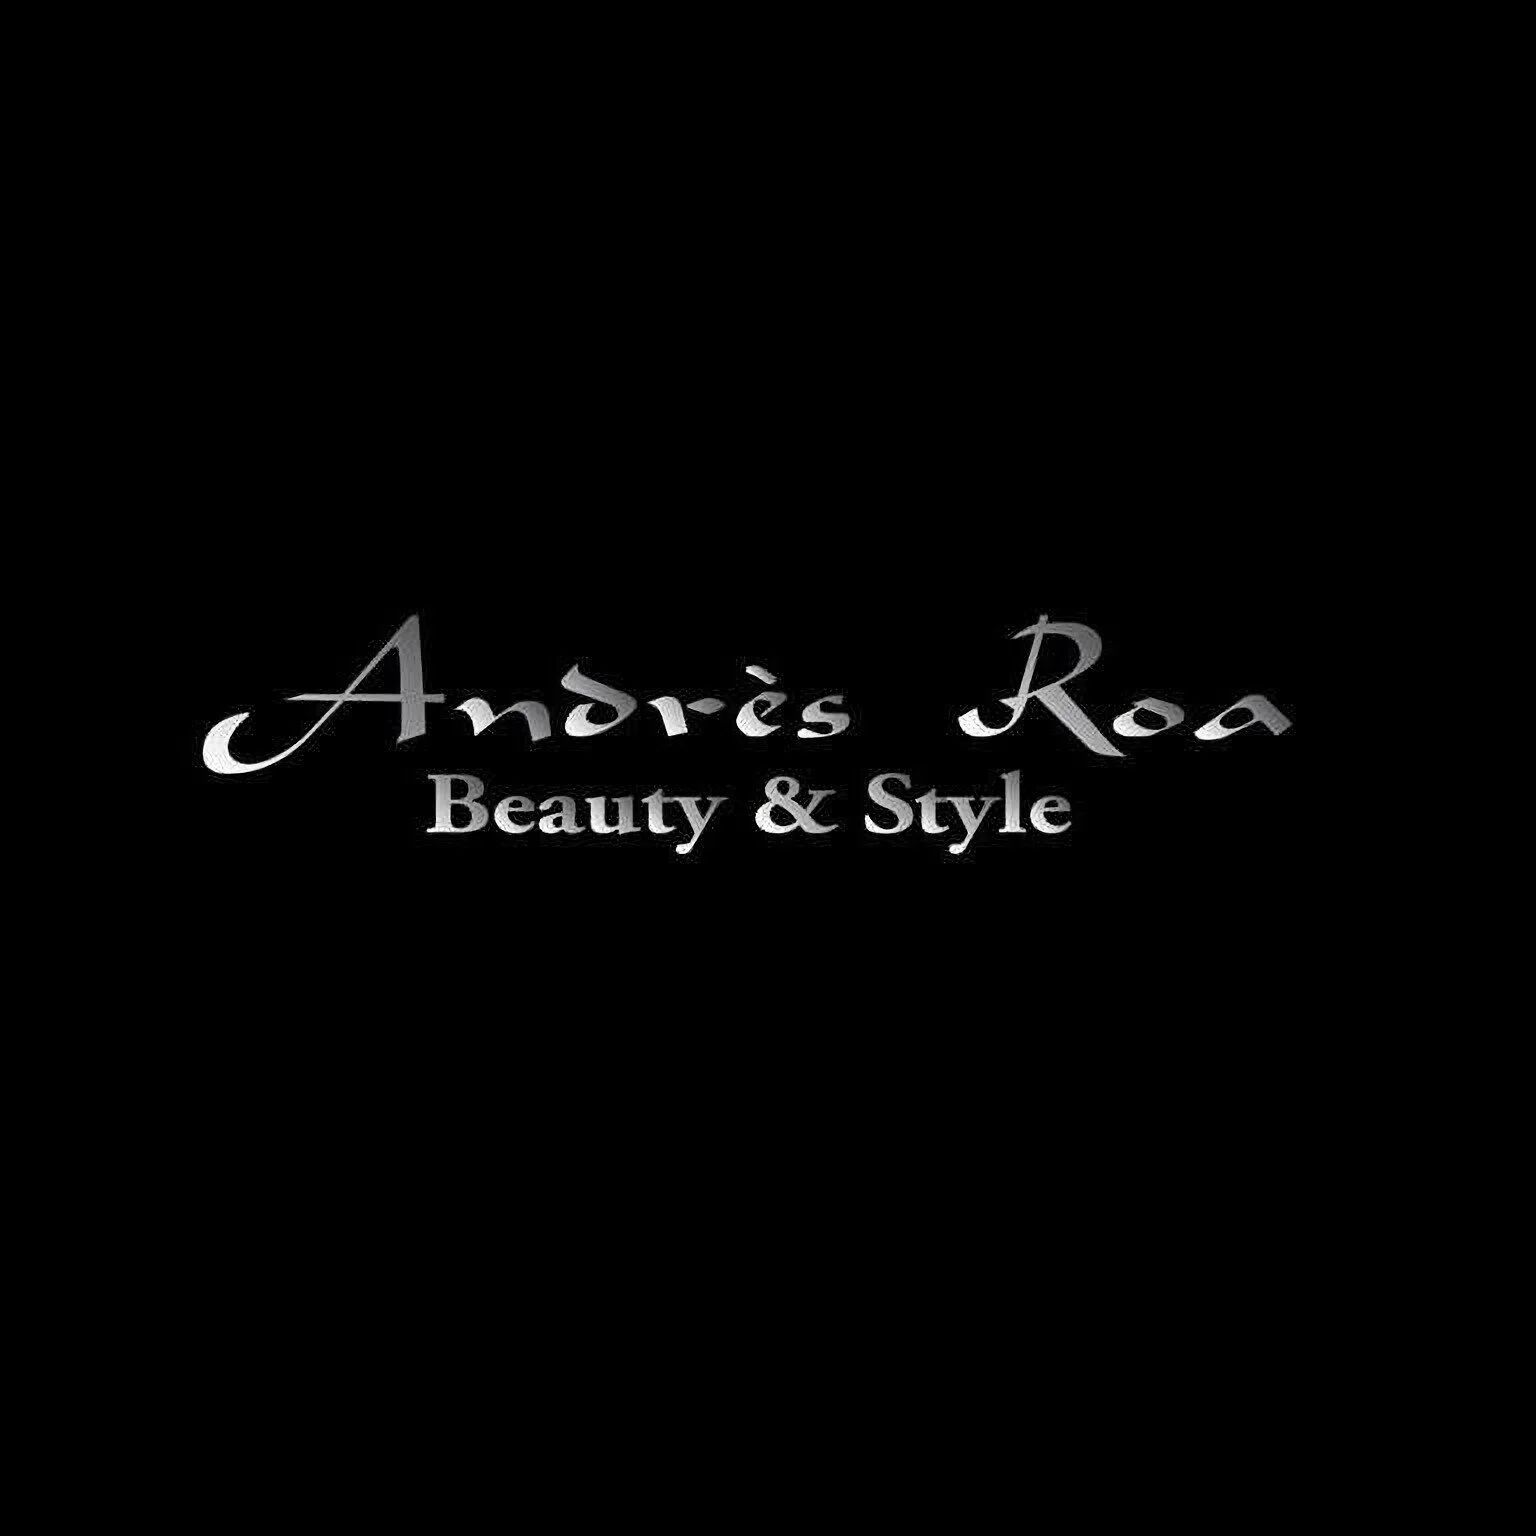 Andrés Roa Beauty & Style-2267